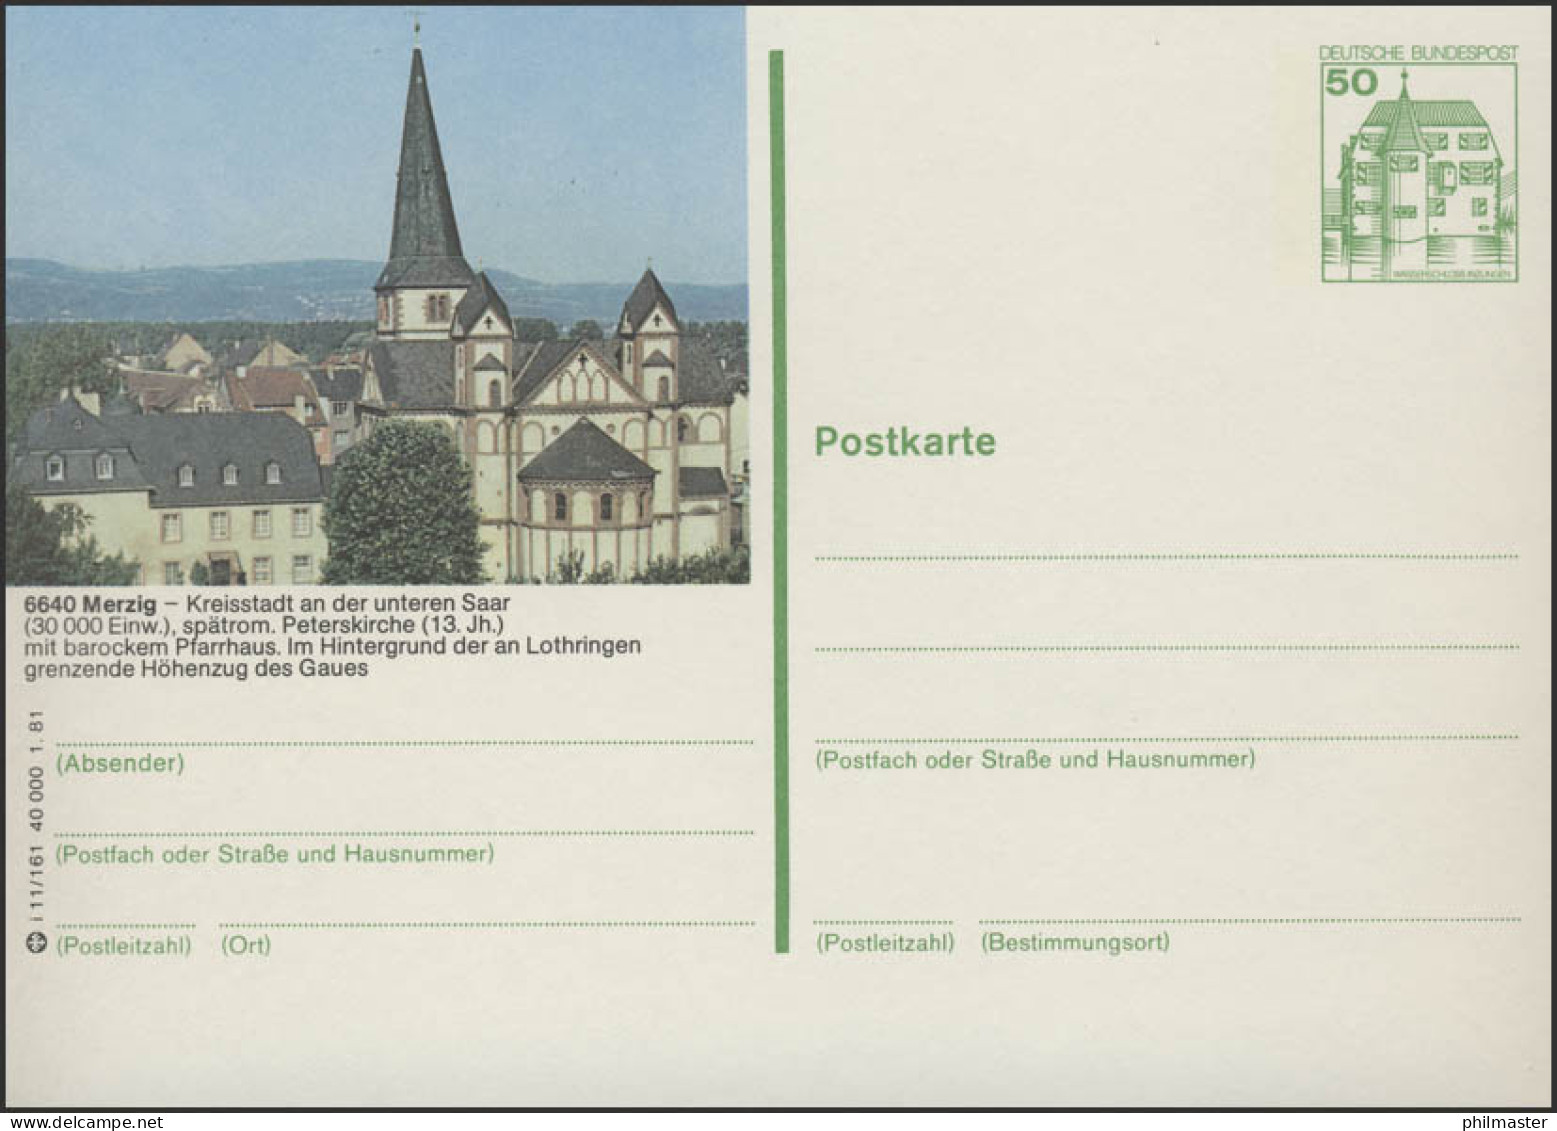 P134-i11/161 - 6640 Merzig, St.-Peter-Kirche ** - Illustrated Postcards - Mint